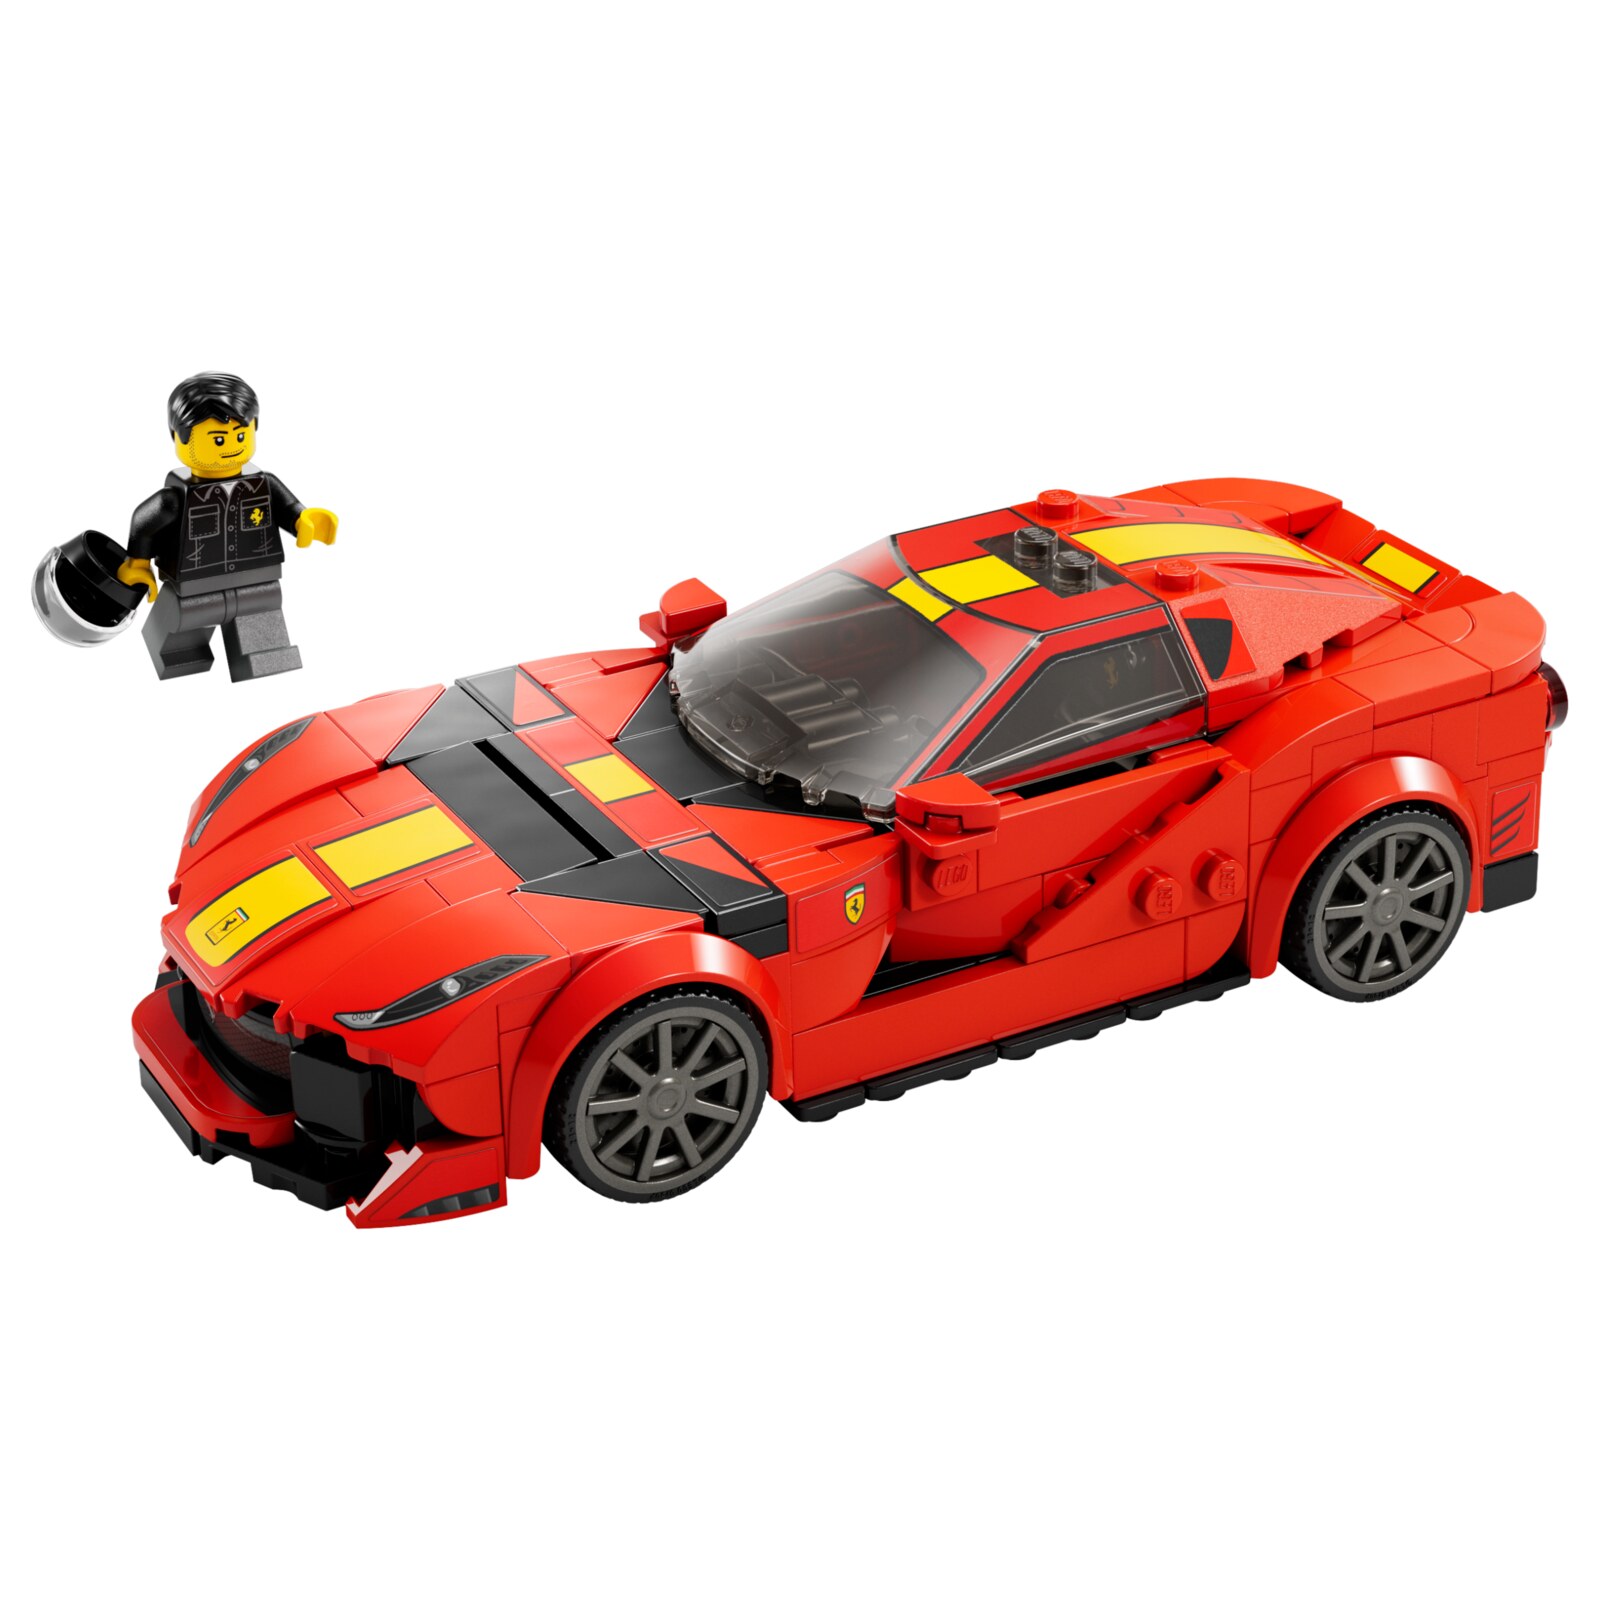 Конструктор LEGO Speed Champions Ferrari 812 Competizione, 261 деталь, 76914 конструктор lego speed champions 76902 mclaren elva